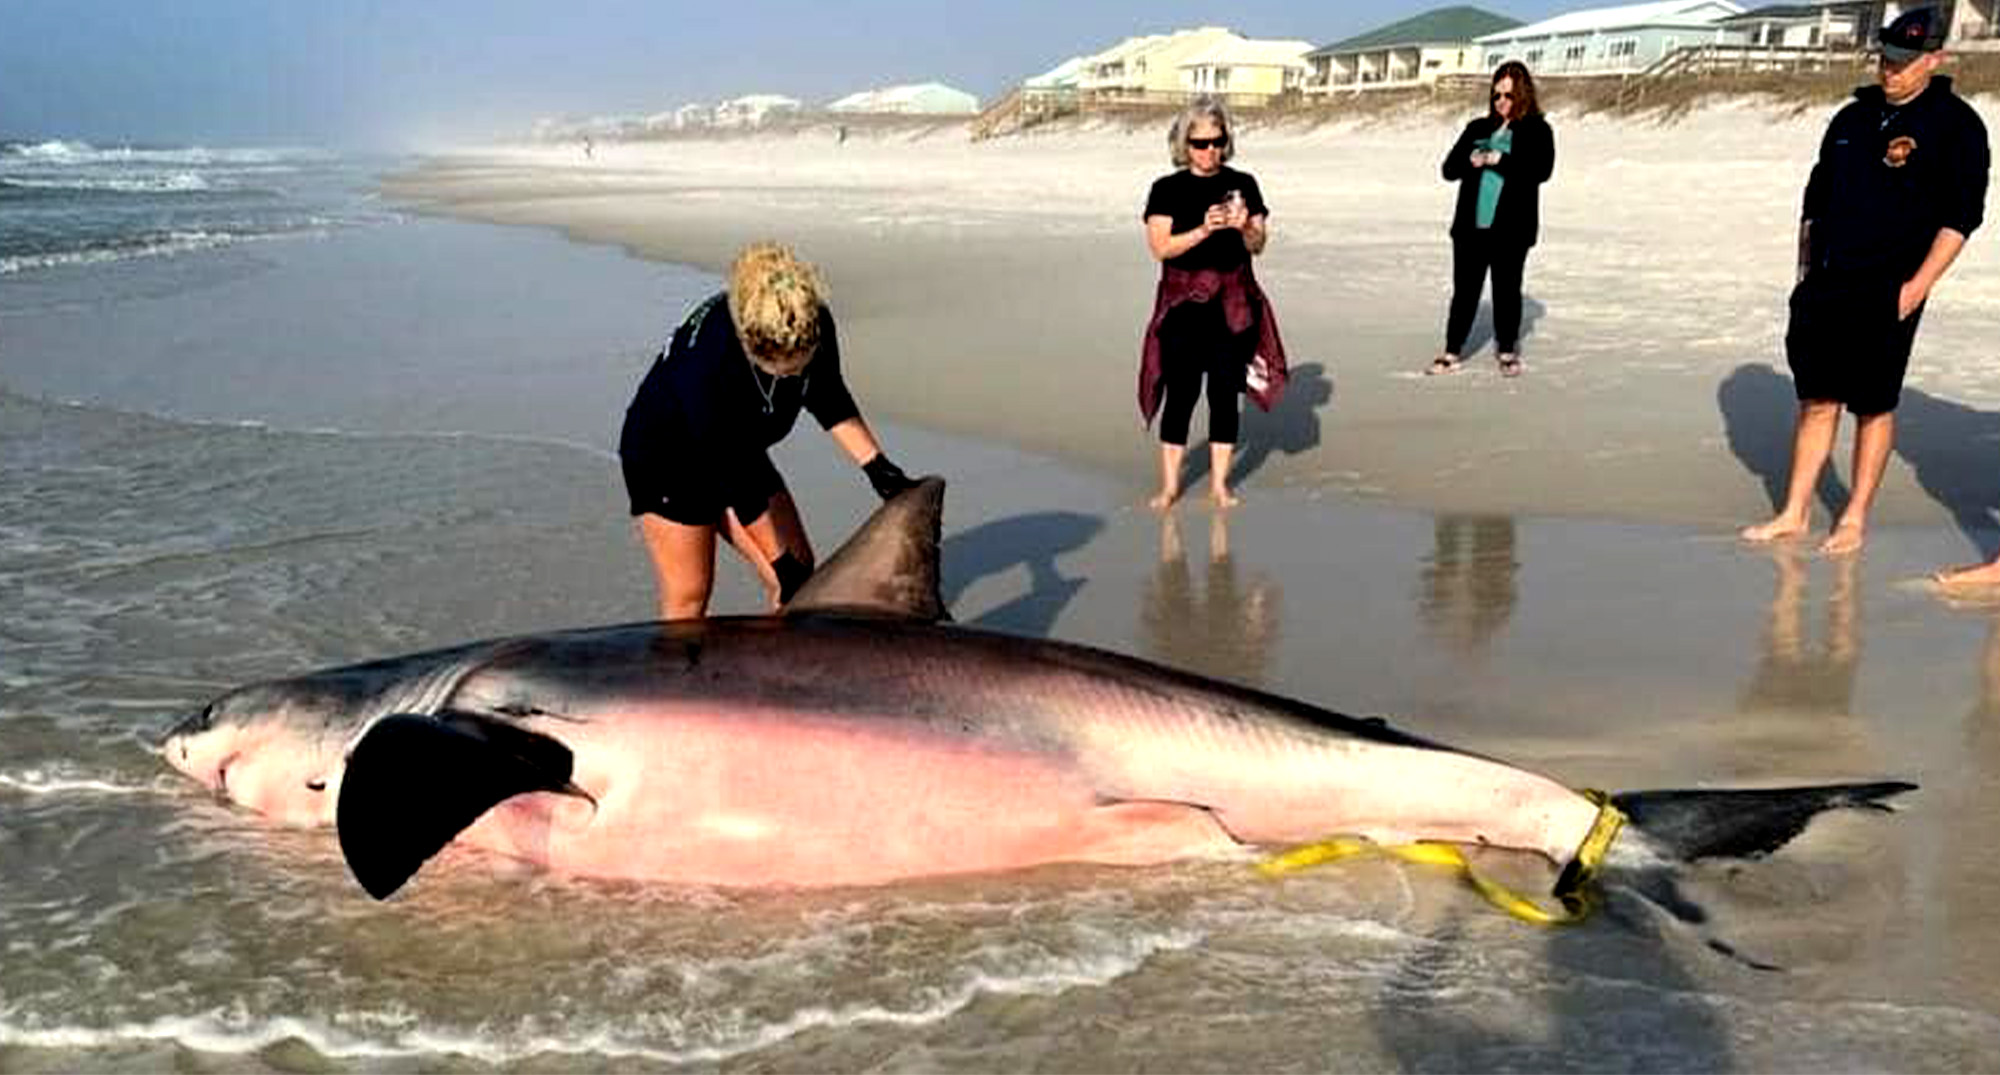 Biologists investigate a dead shark found on a Florida beach.